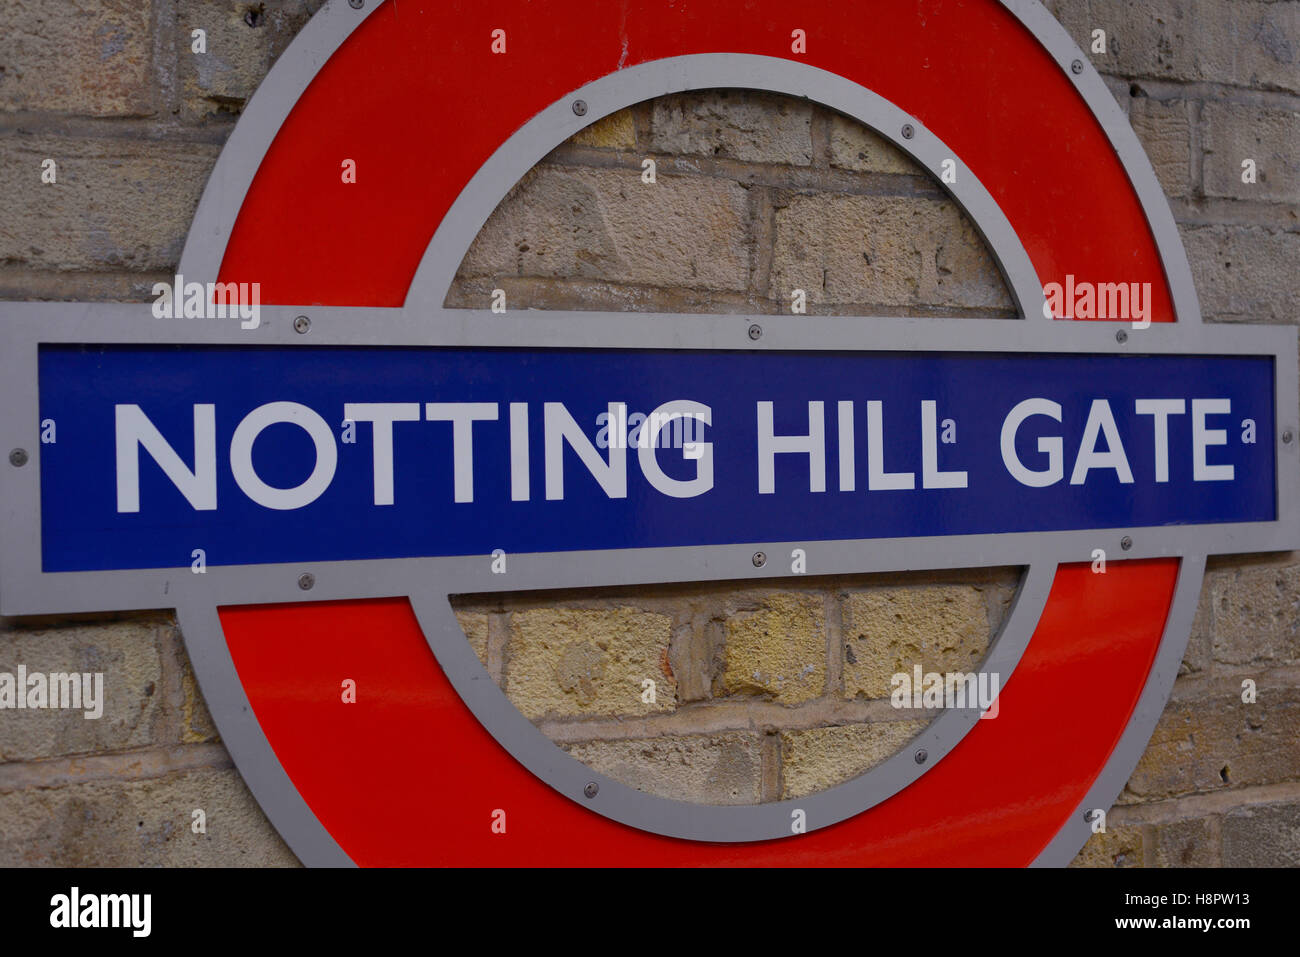 Notting Hill Gate, London underground sign Stock Photo